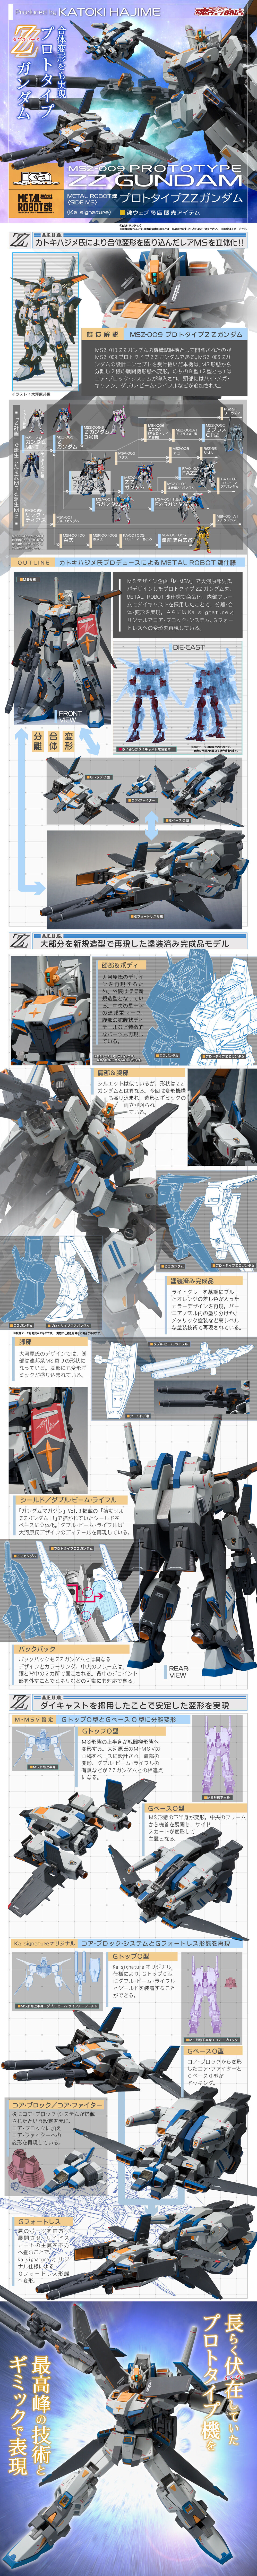 Robot Spirits[Ka Signature](Side MS) MSZ-009 Prototype Double Zeta Gundam